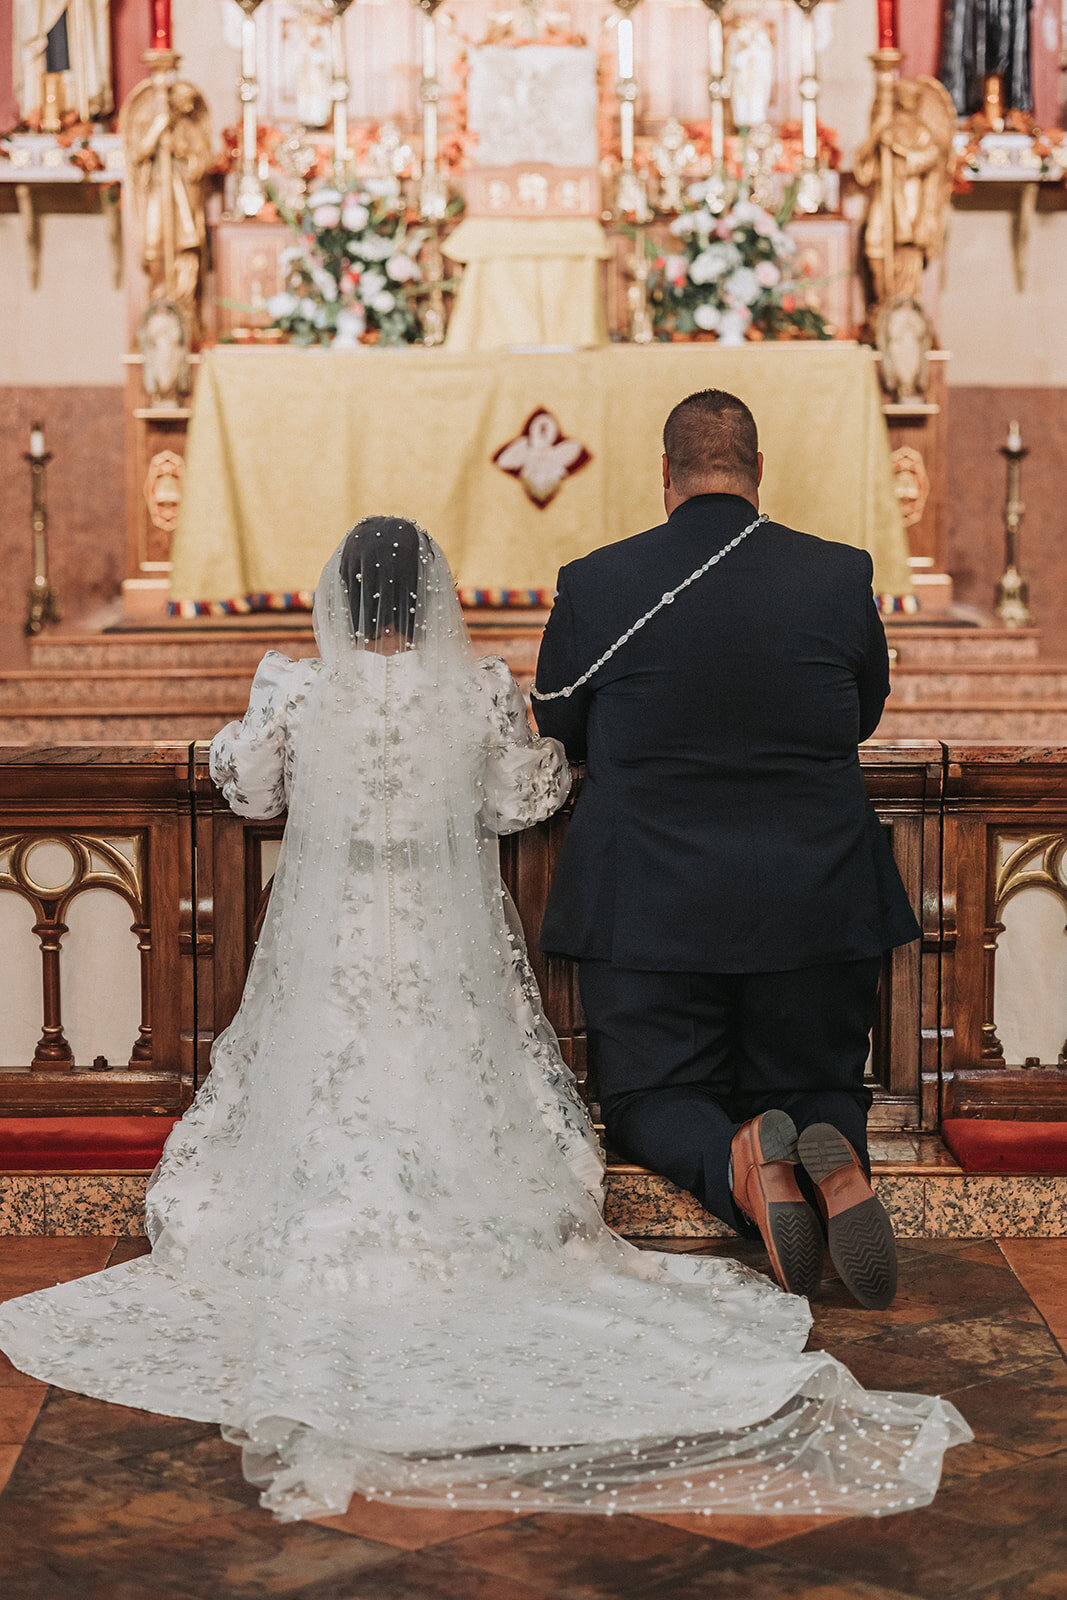 The Wedding Lasso Tradition